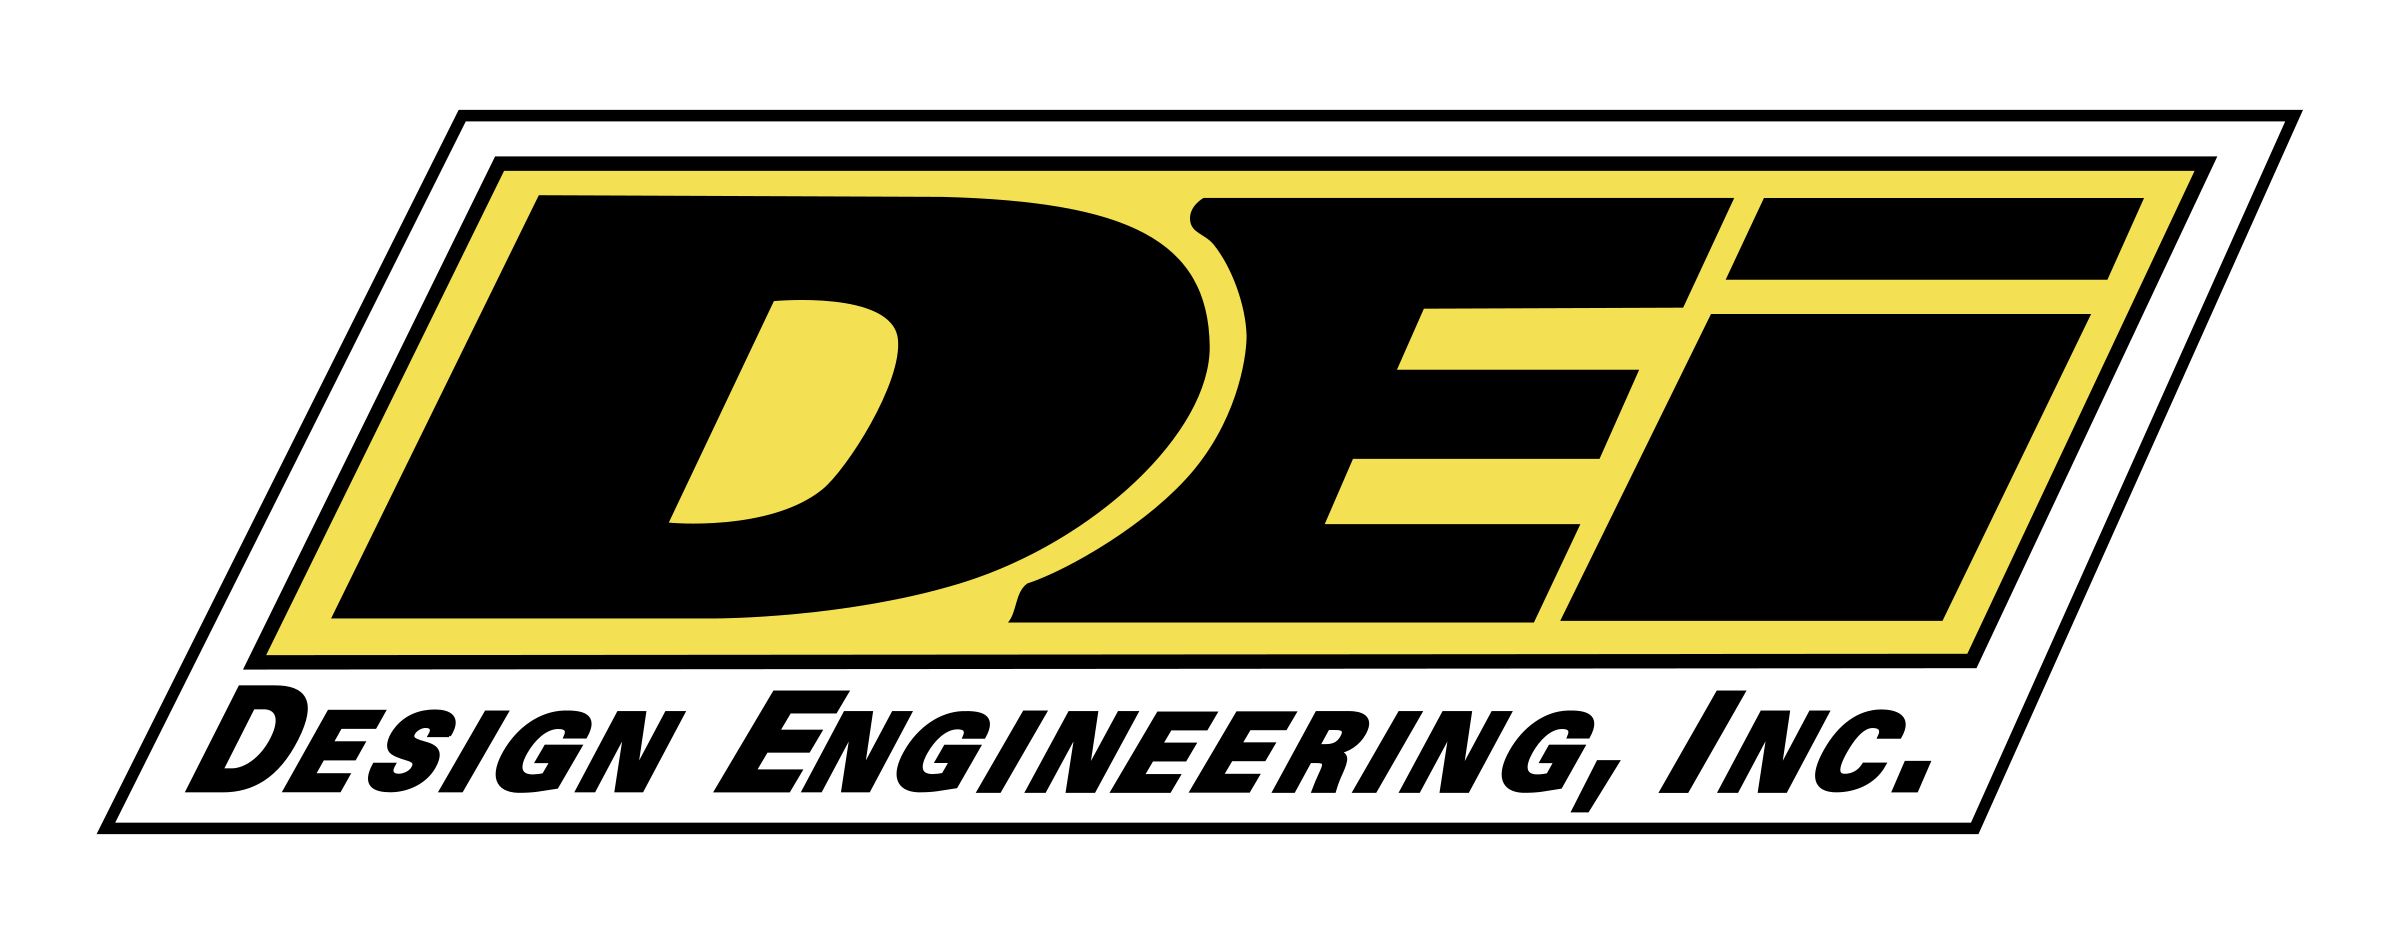 Design Engineering Inc. logo